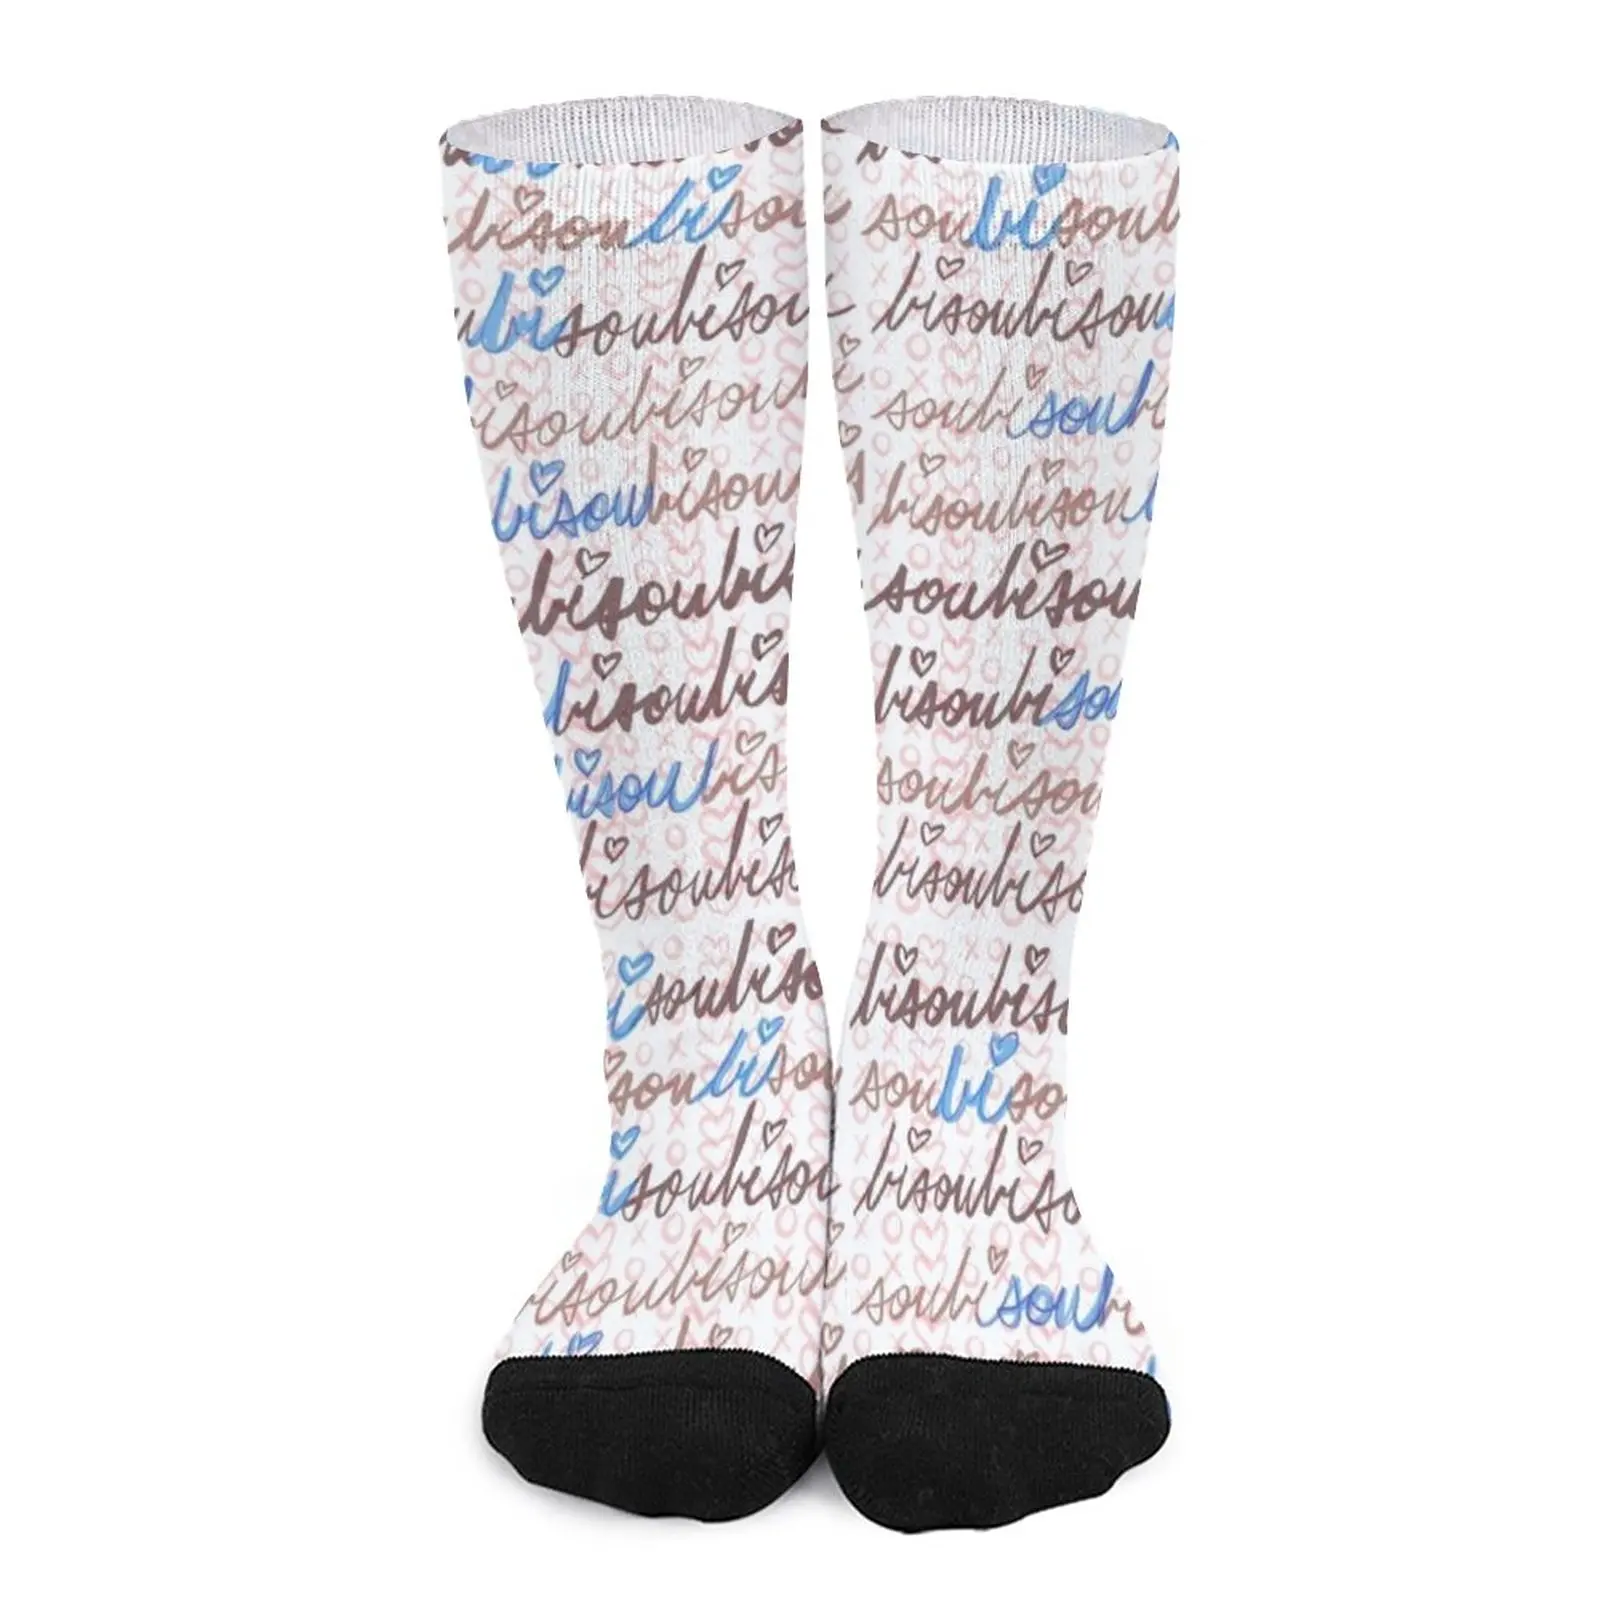 Bi Soul Bisou Blue and Brown Socks Stockings Argentina funny socks for Women dareu ek868 kaihl brown cornflower blue